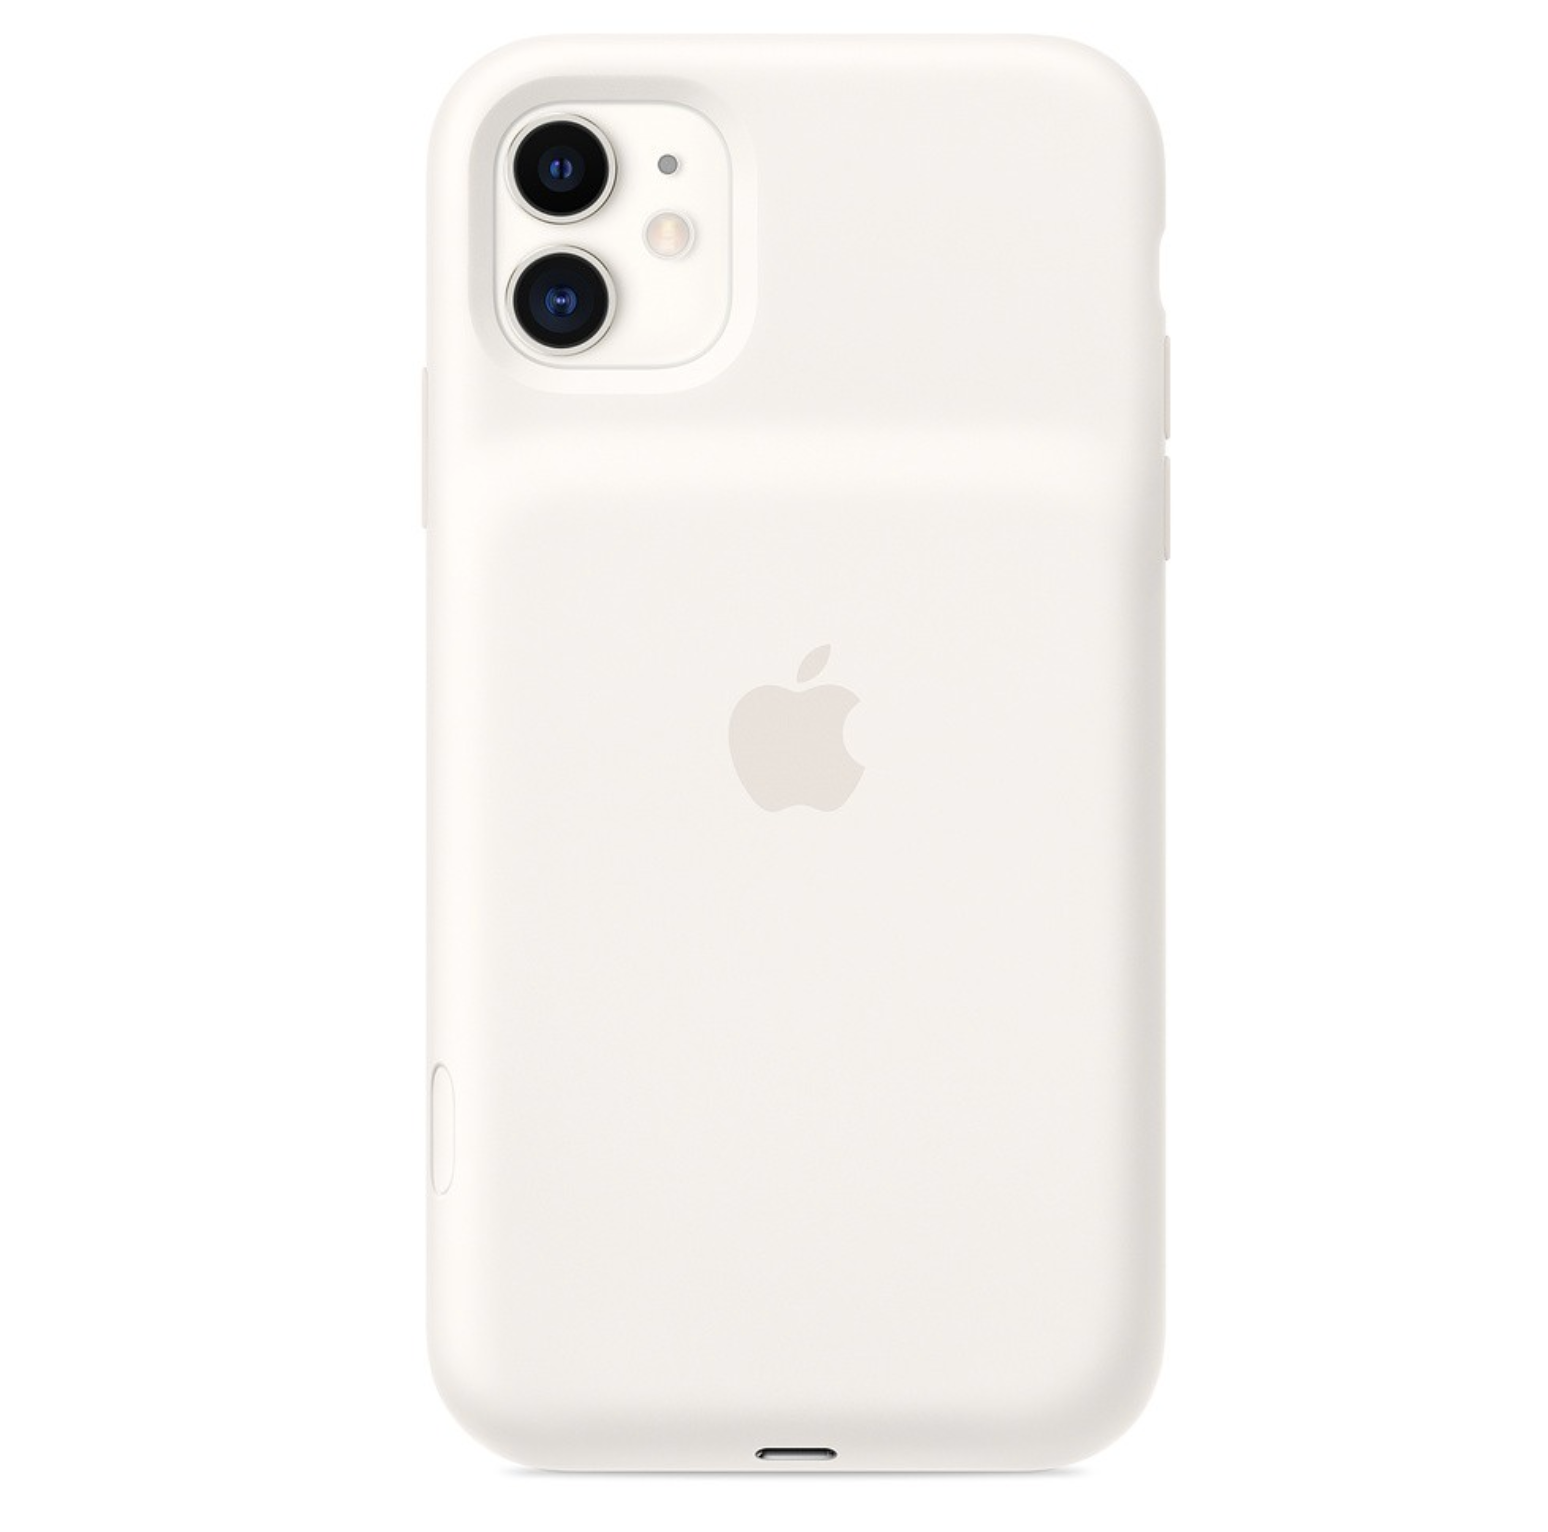 Apple iPhone 11 Smart Battery Case - Soft White (MWVJ2)